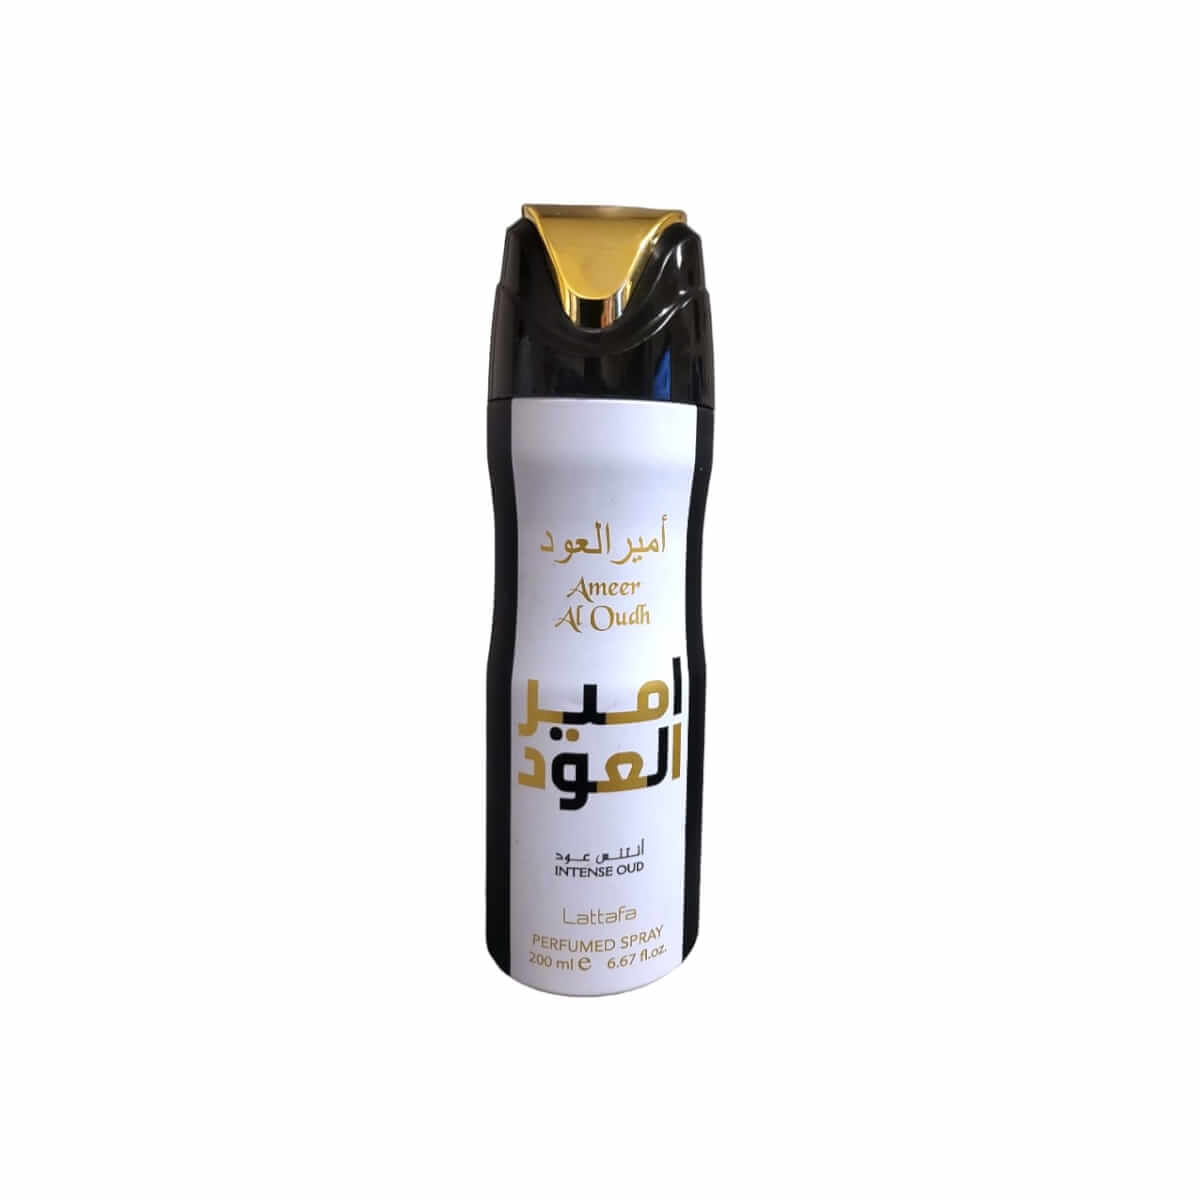 Ameer Al Oudh Intense Oud Perfumed Body Spray 200Ml By Lattafa